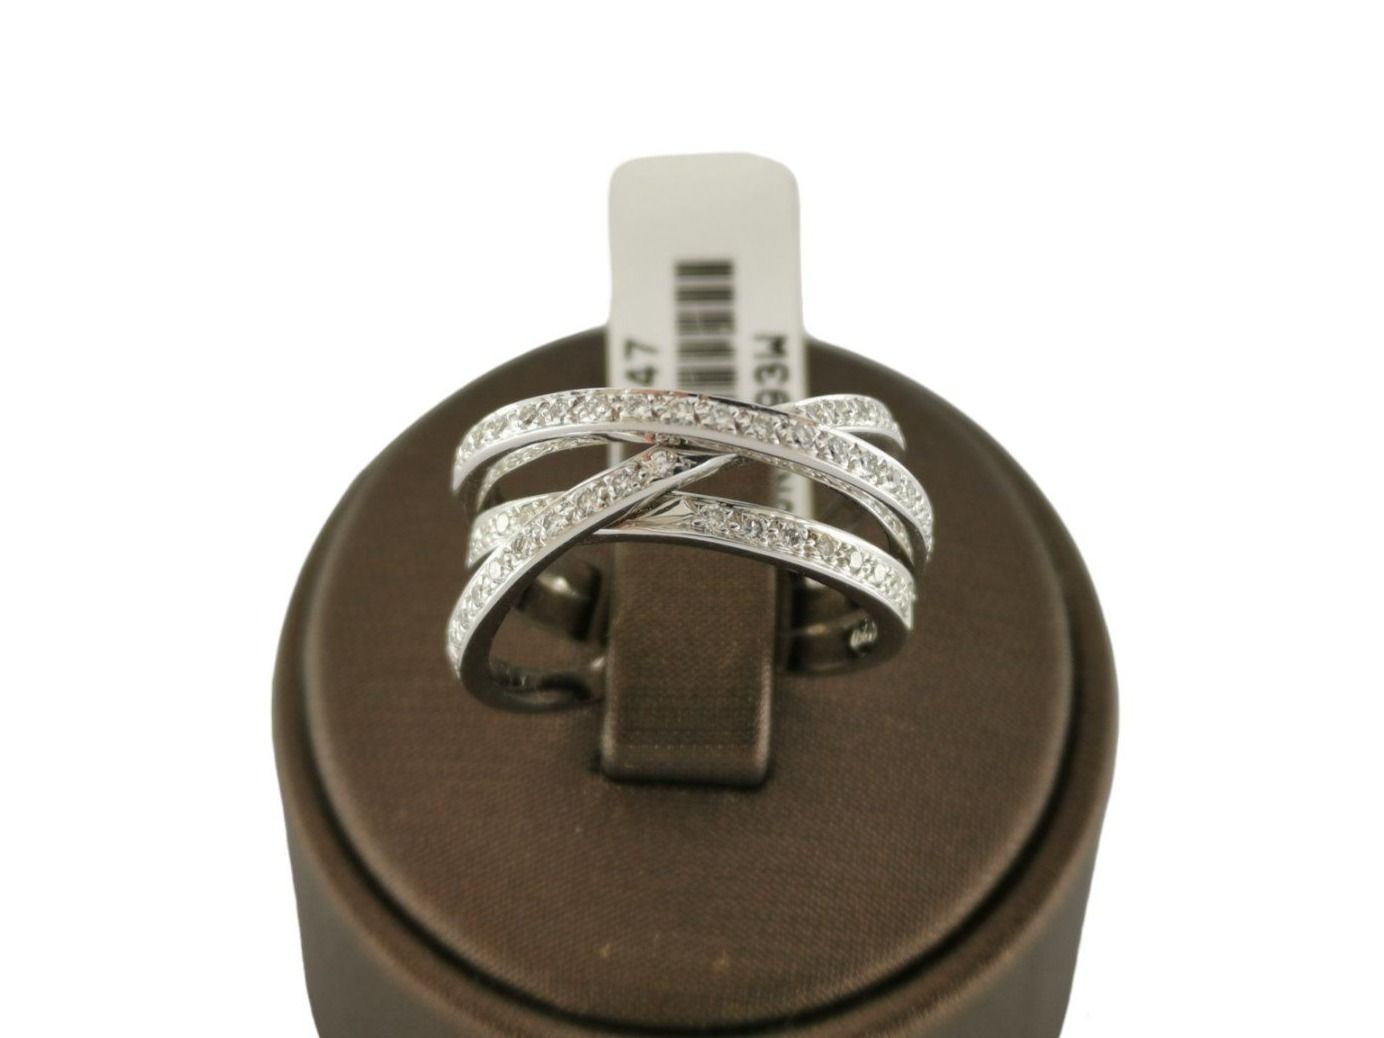 18K Weissgold Ring mit Diamanten - RING06127